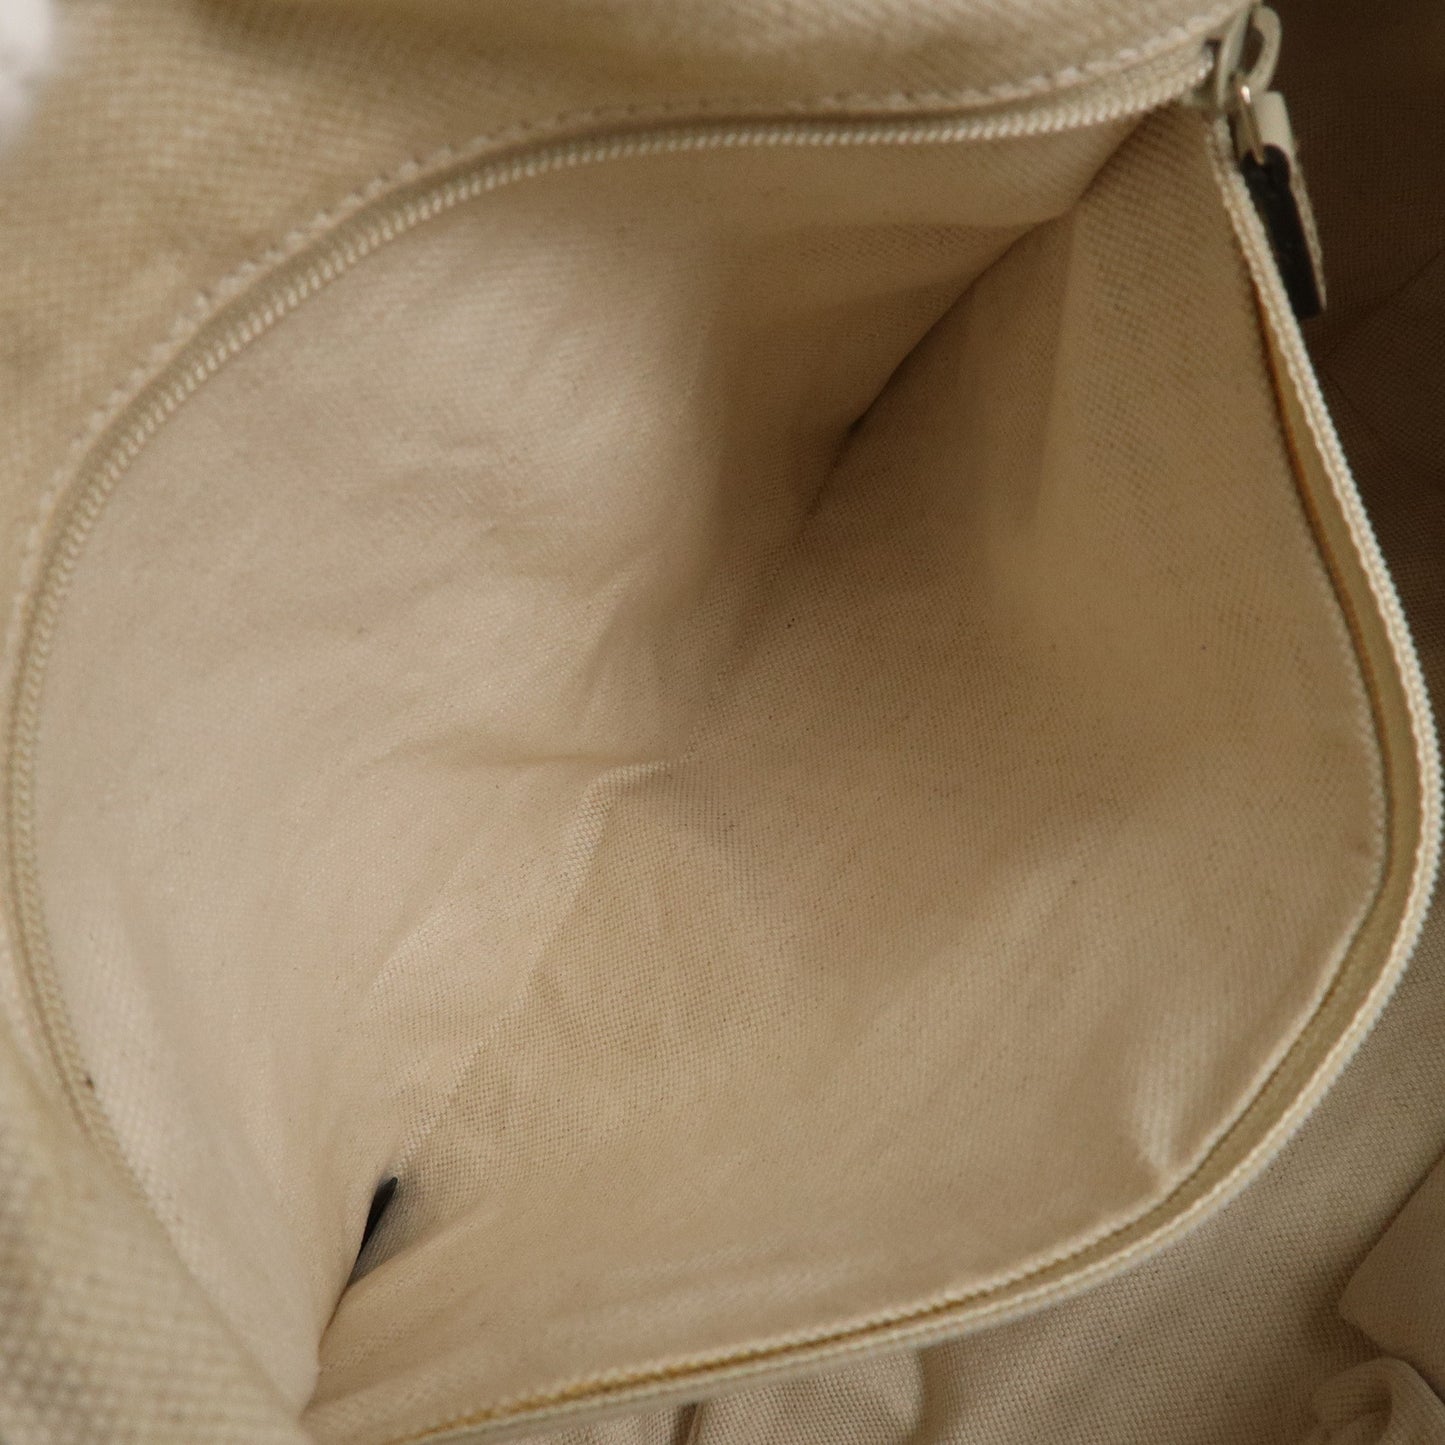 GUCCI Sukey GG Canvas Leather Shoulder Bag Beige Ivory 232955